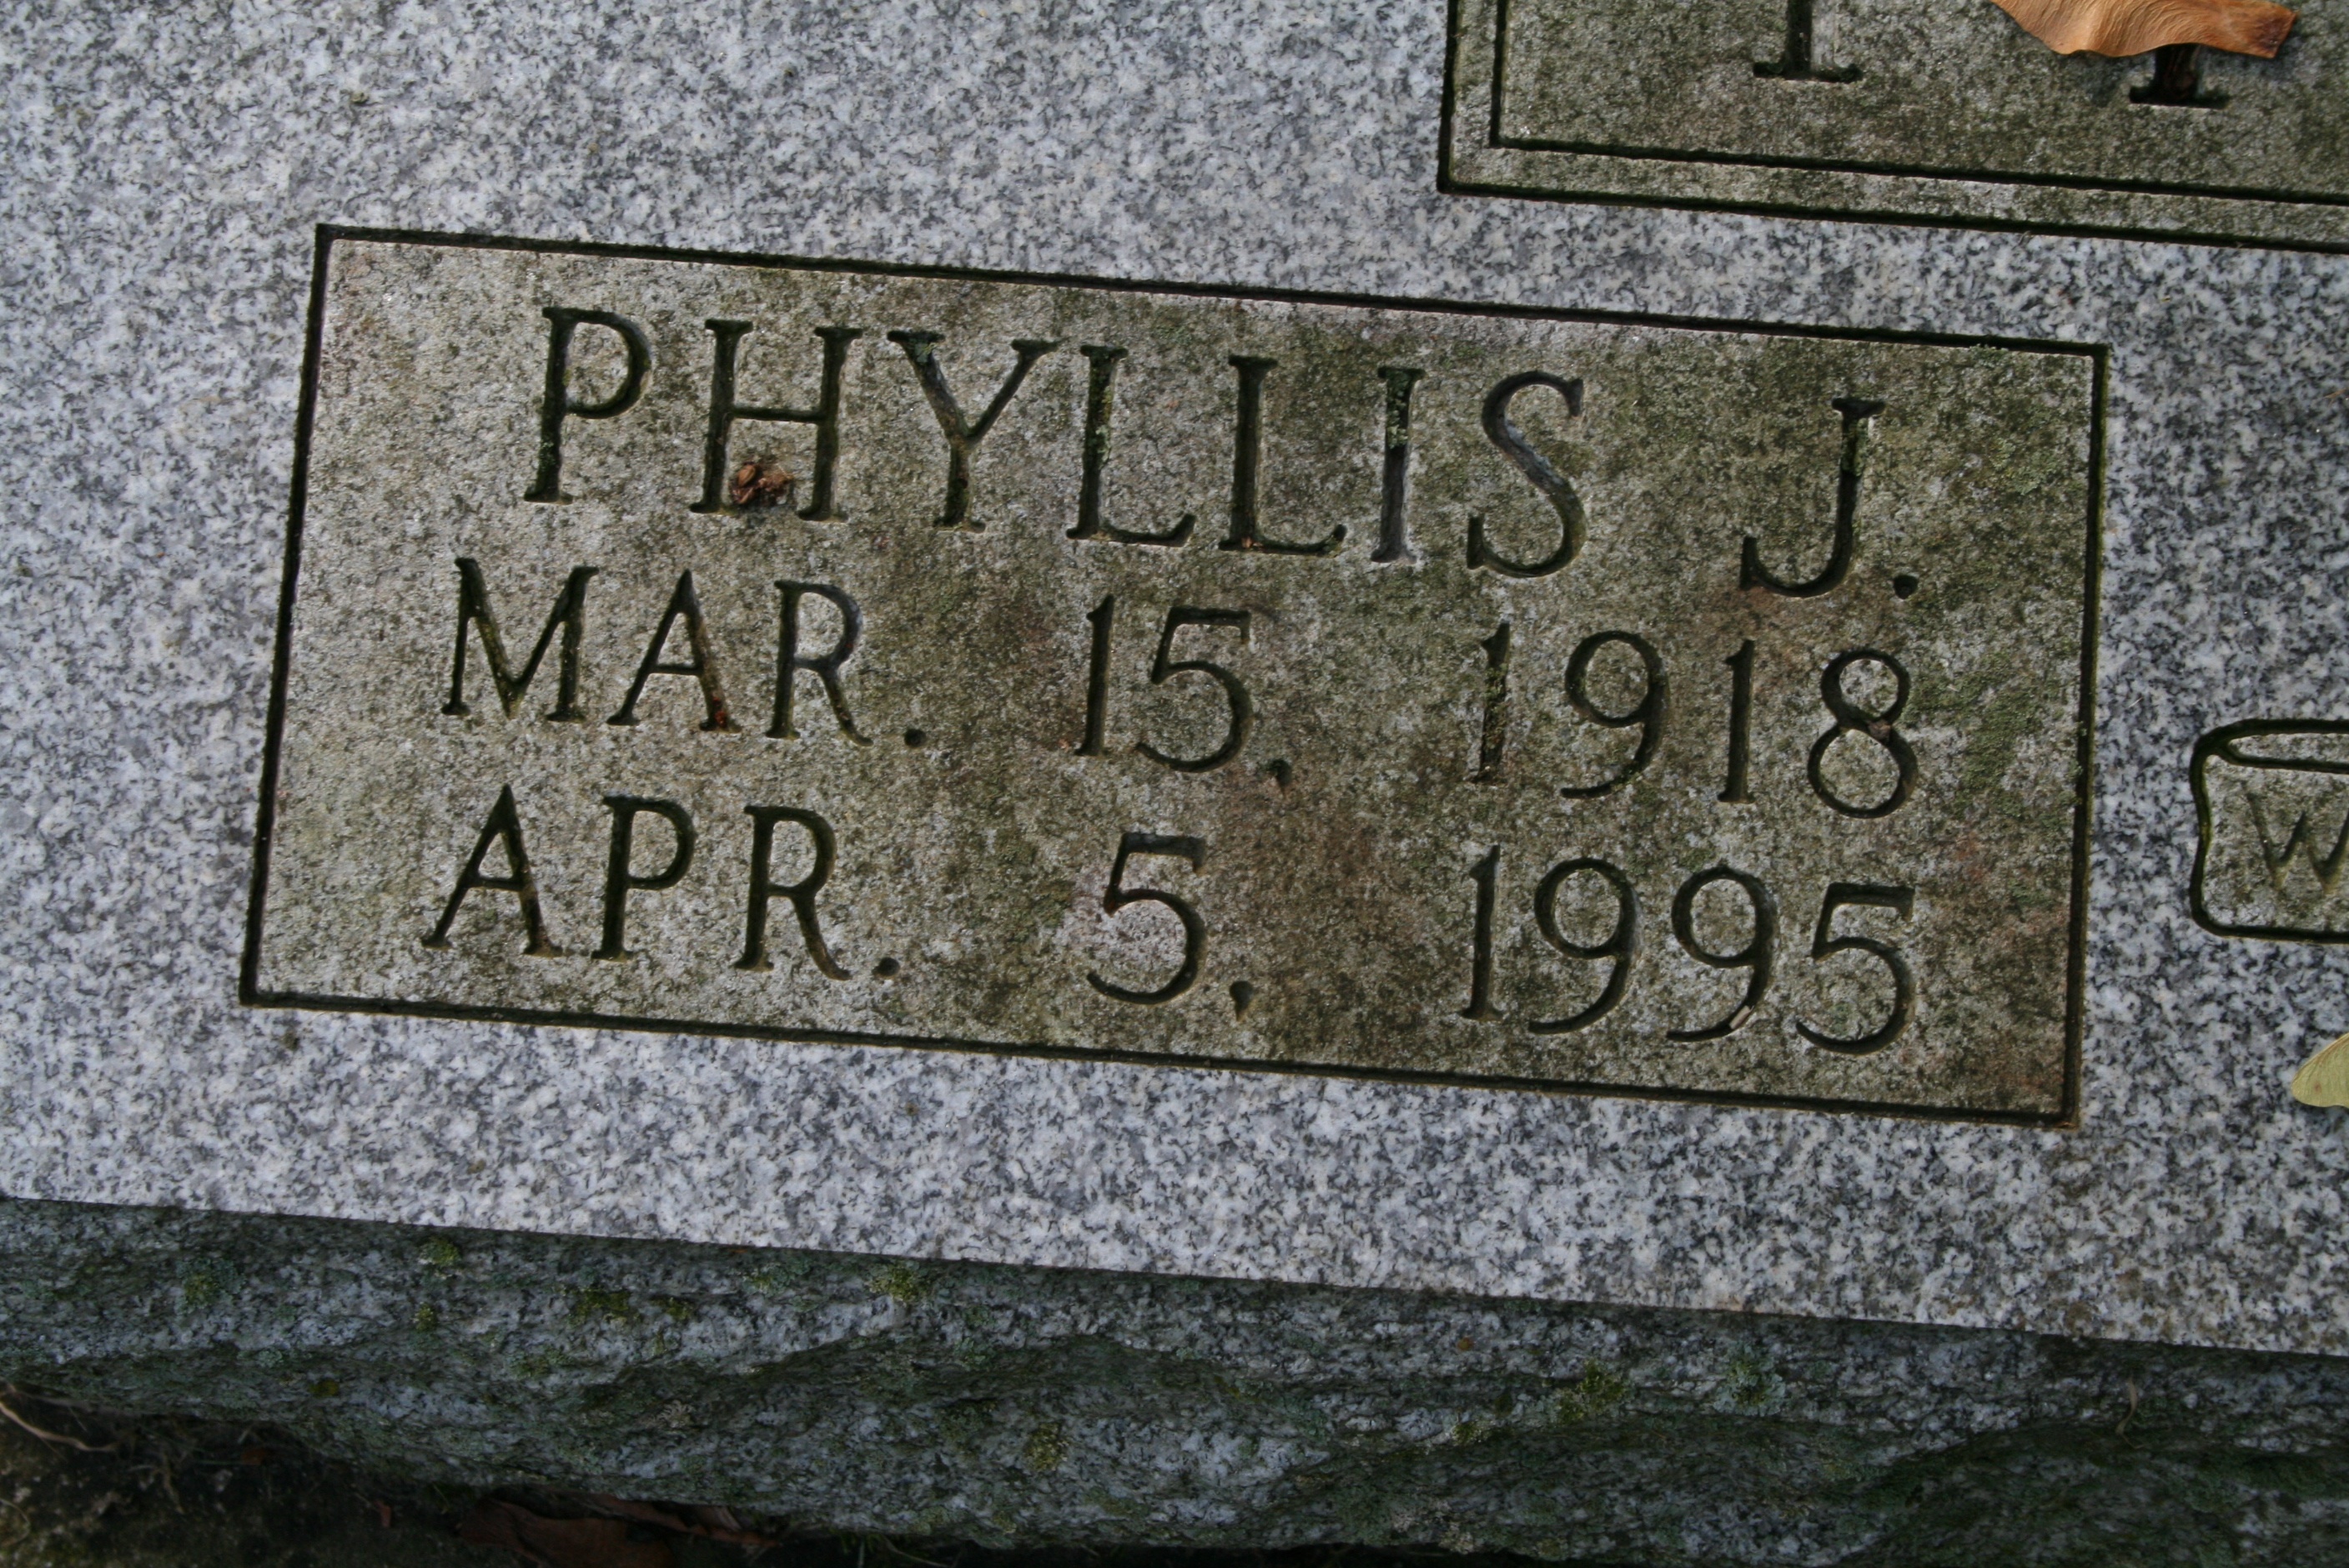 Finkle, Phyllis